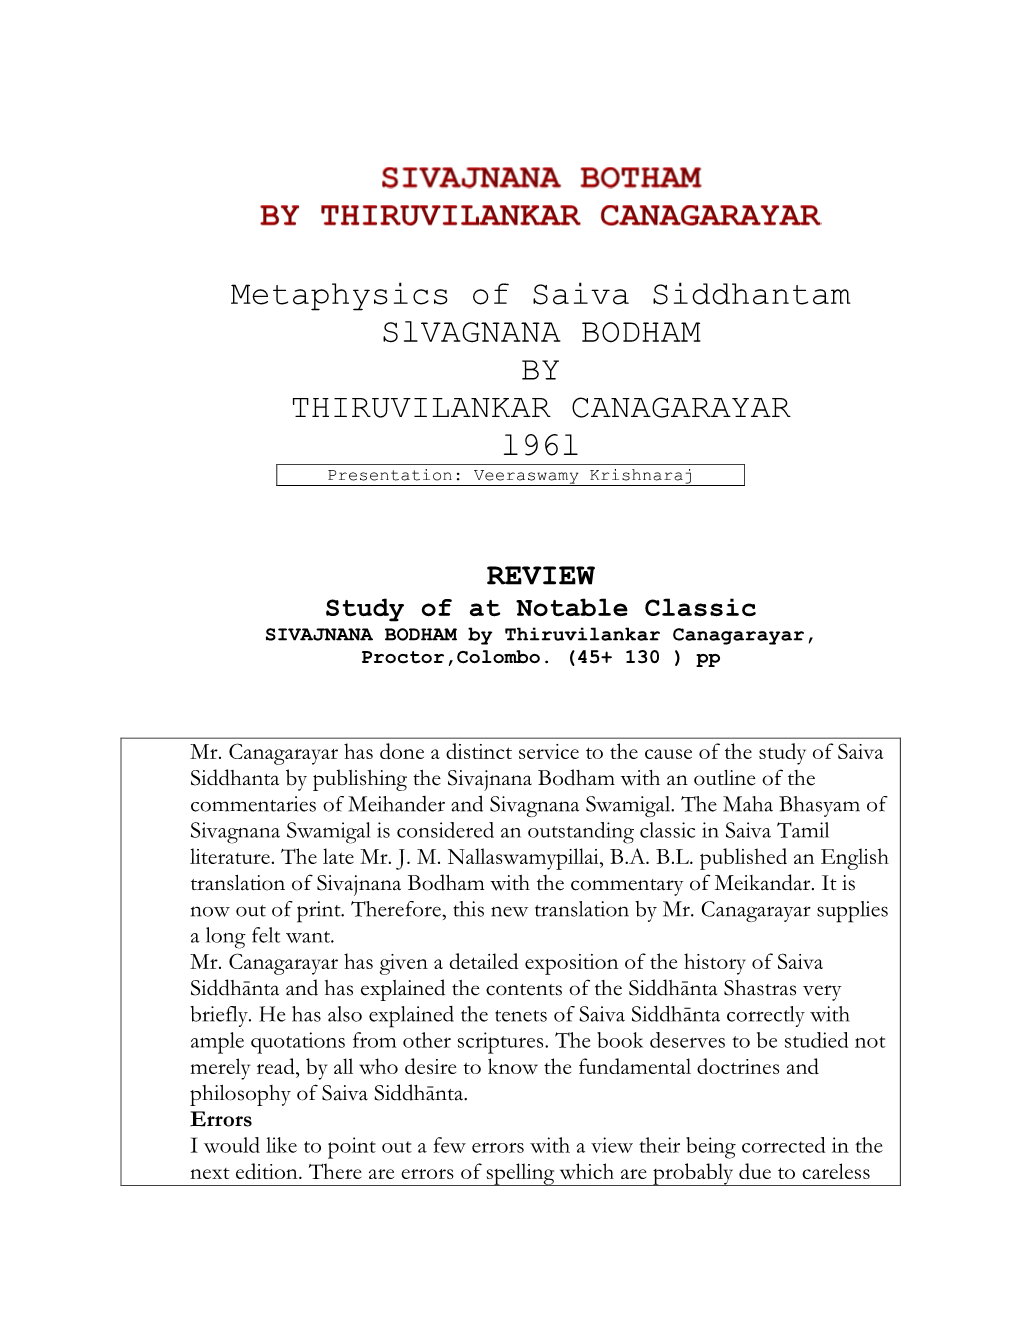 Metaphysics of Saiva Siddhantam Slvagnana BODHAM by THIRUVILANKAR CANAGARAYAR L96l Presentation: Veeraswamy Krishnaraj